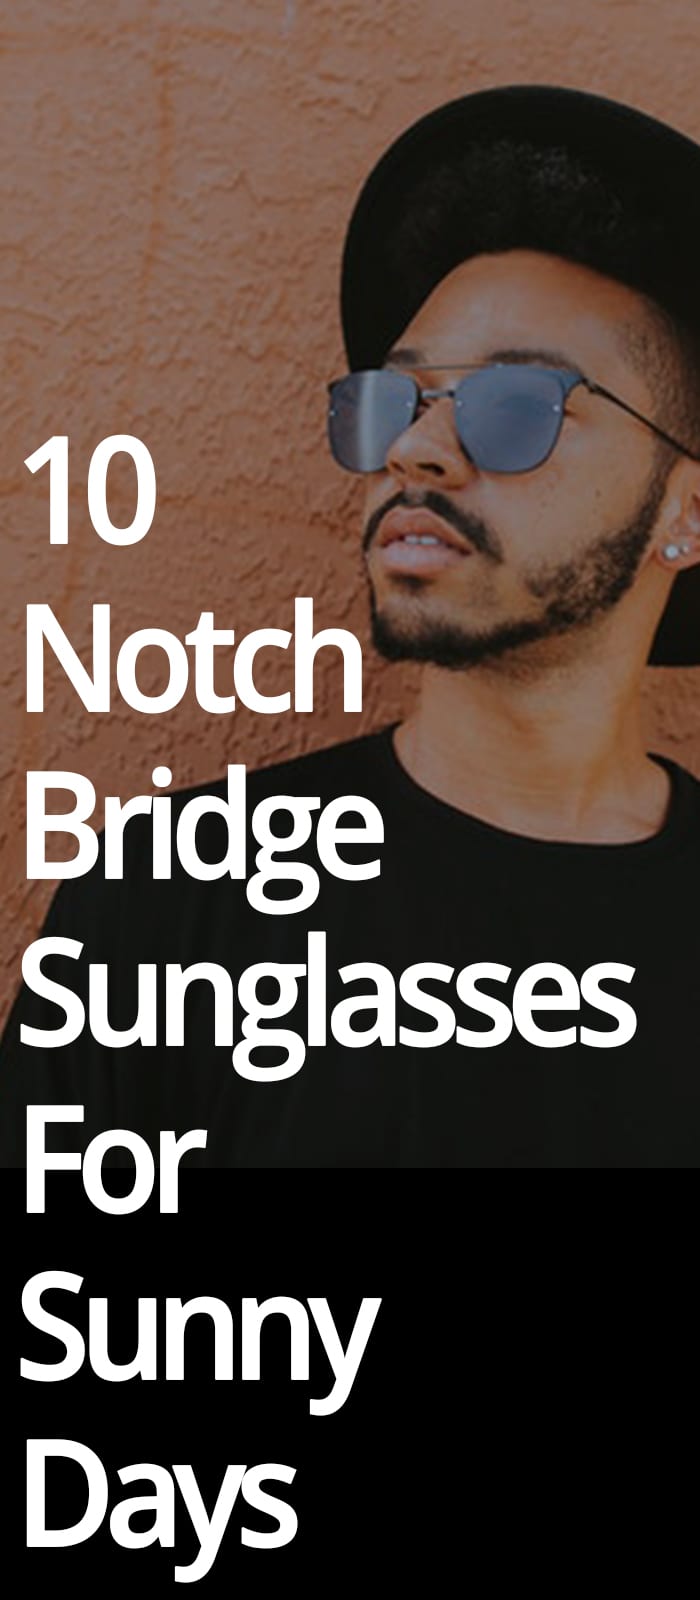 NOTCH BRIDGE SUNGLASSES FOR SUNNY DAYS